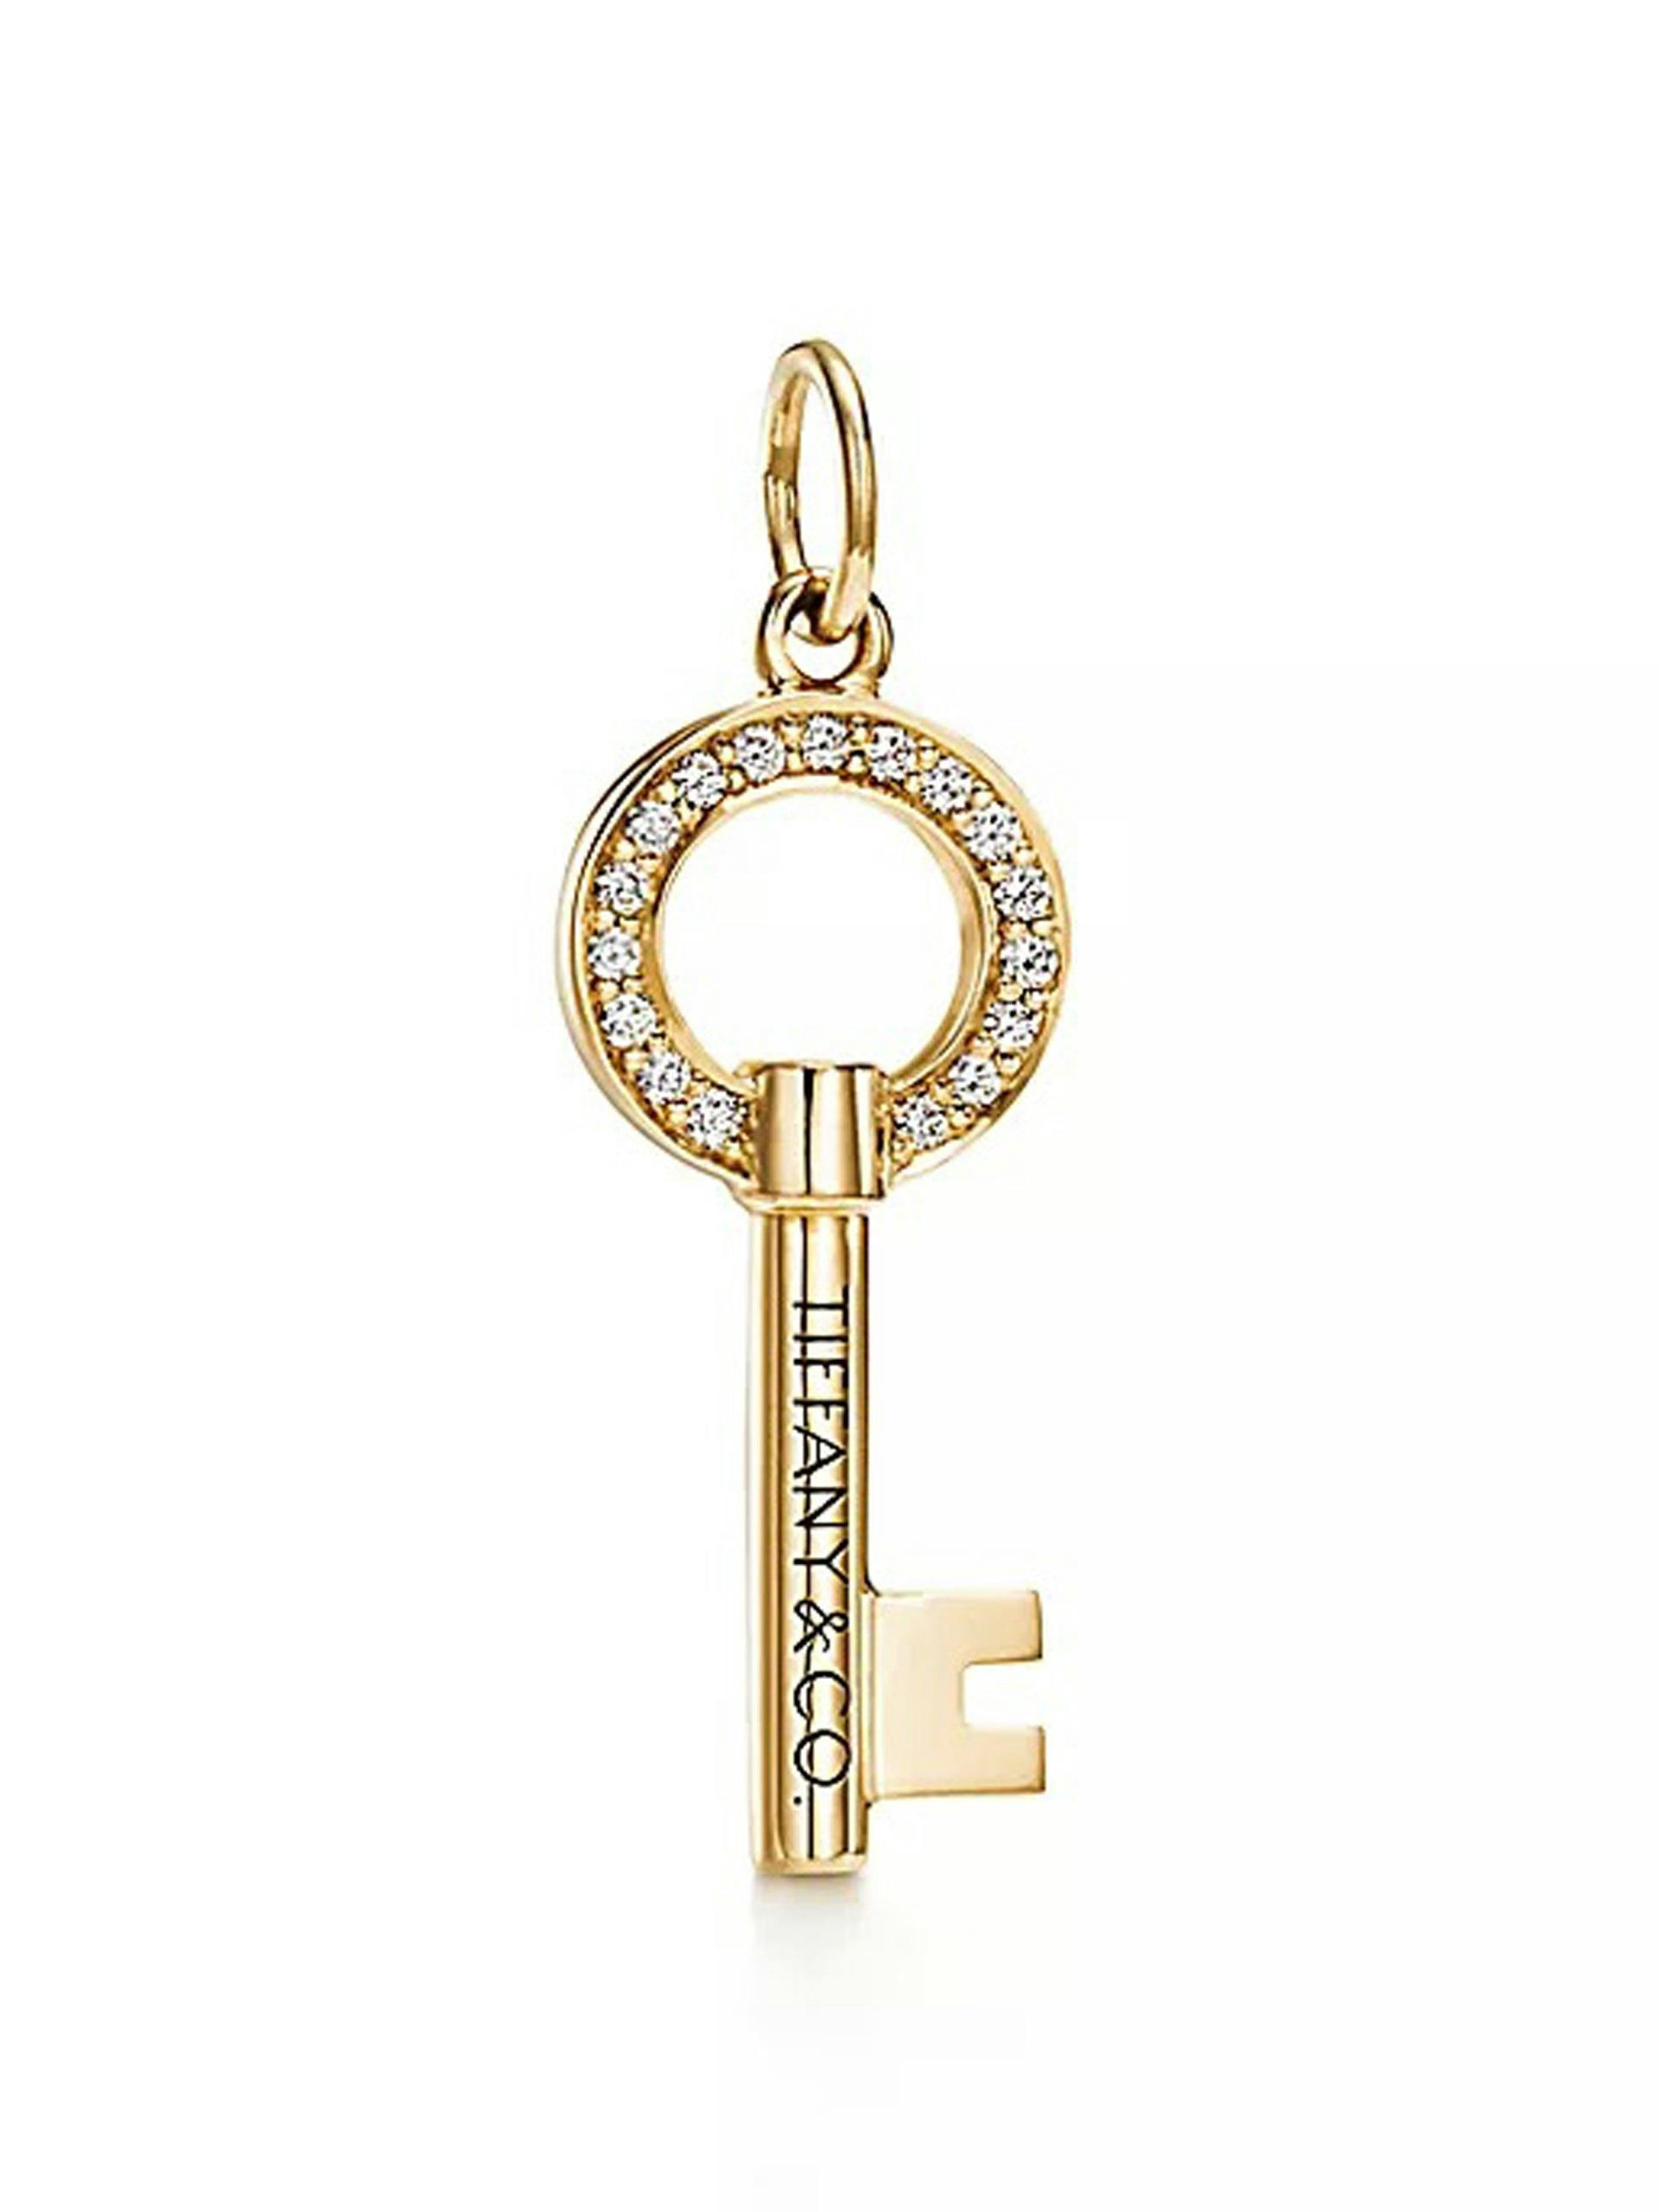 Gold open round key pendant